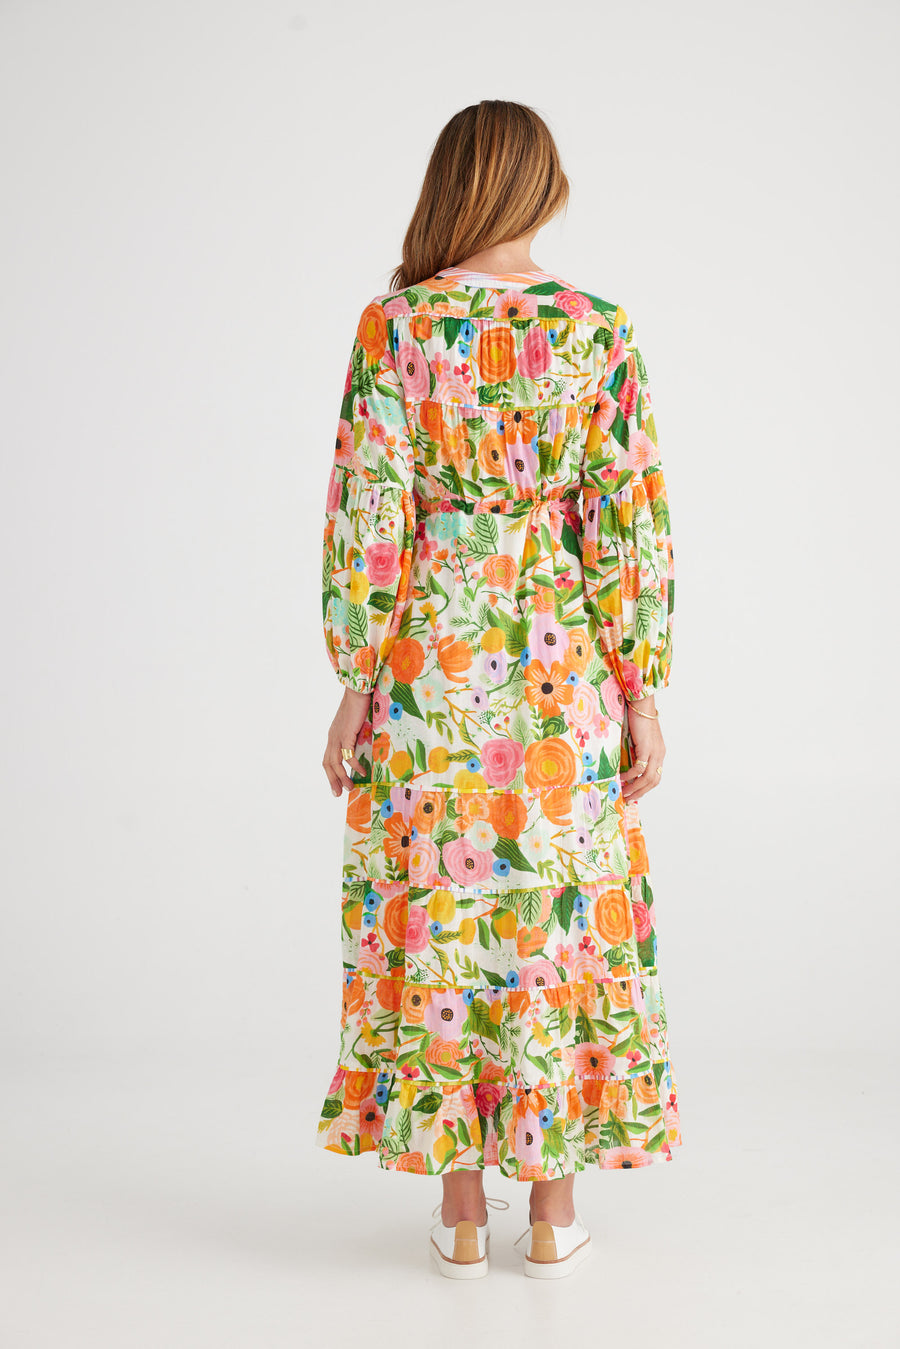 Gertie Dress - Blossom